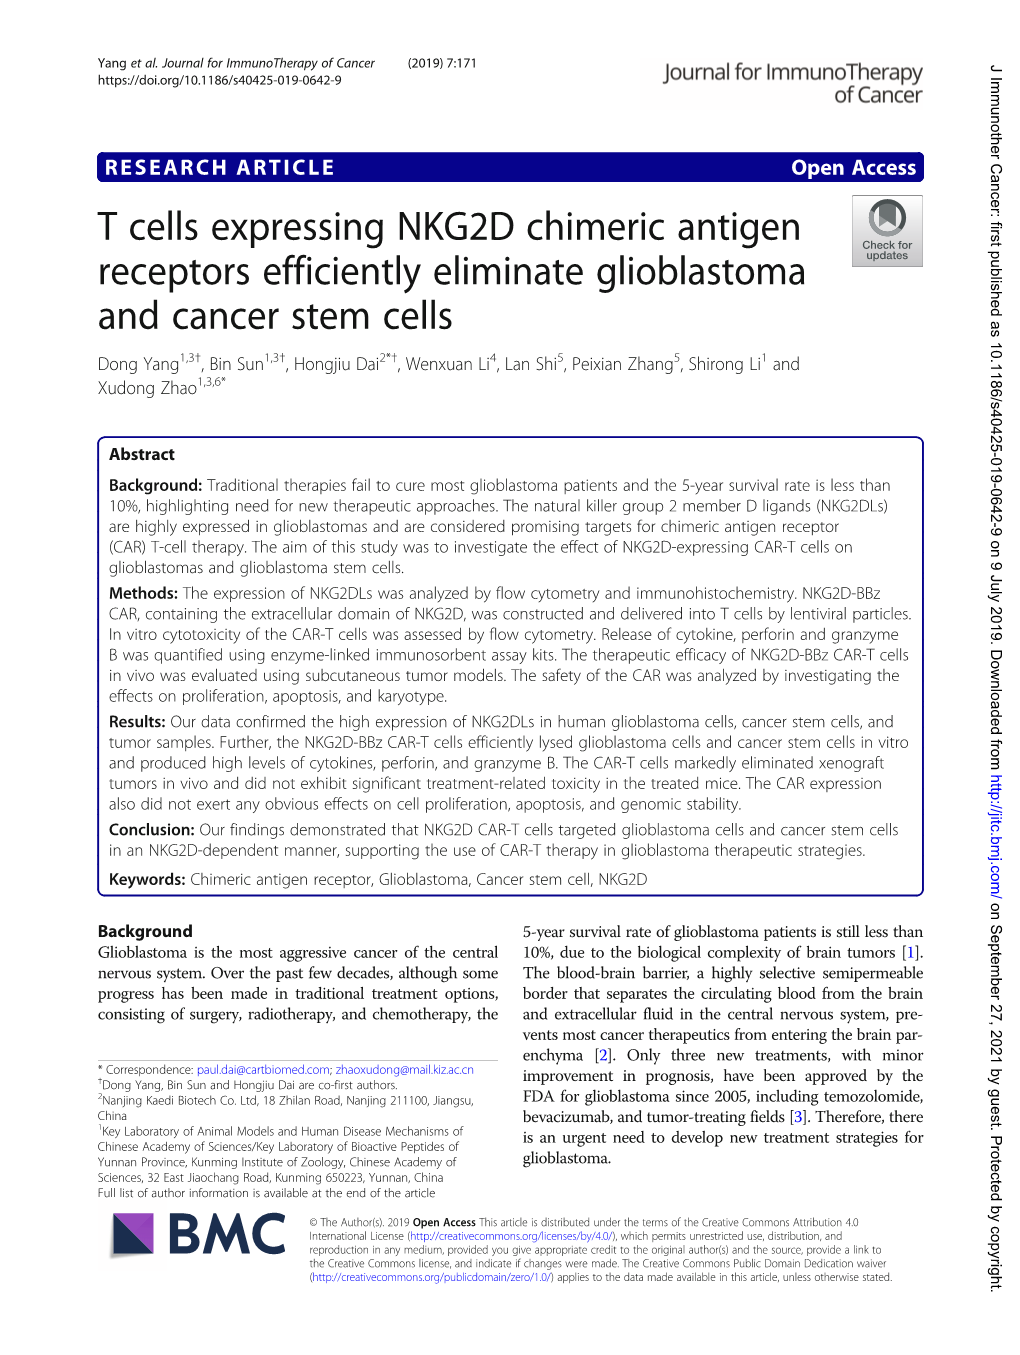 T Cells Expressing NKG2D Chimeric Antigen Receptors Efficiently